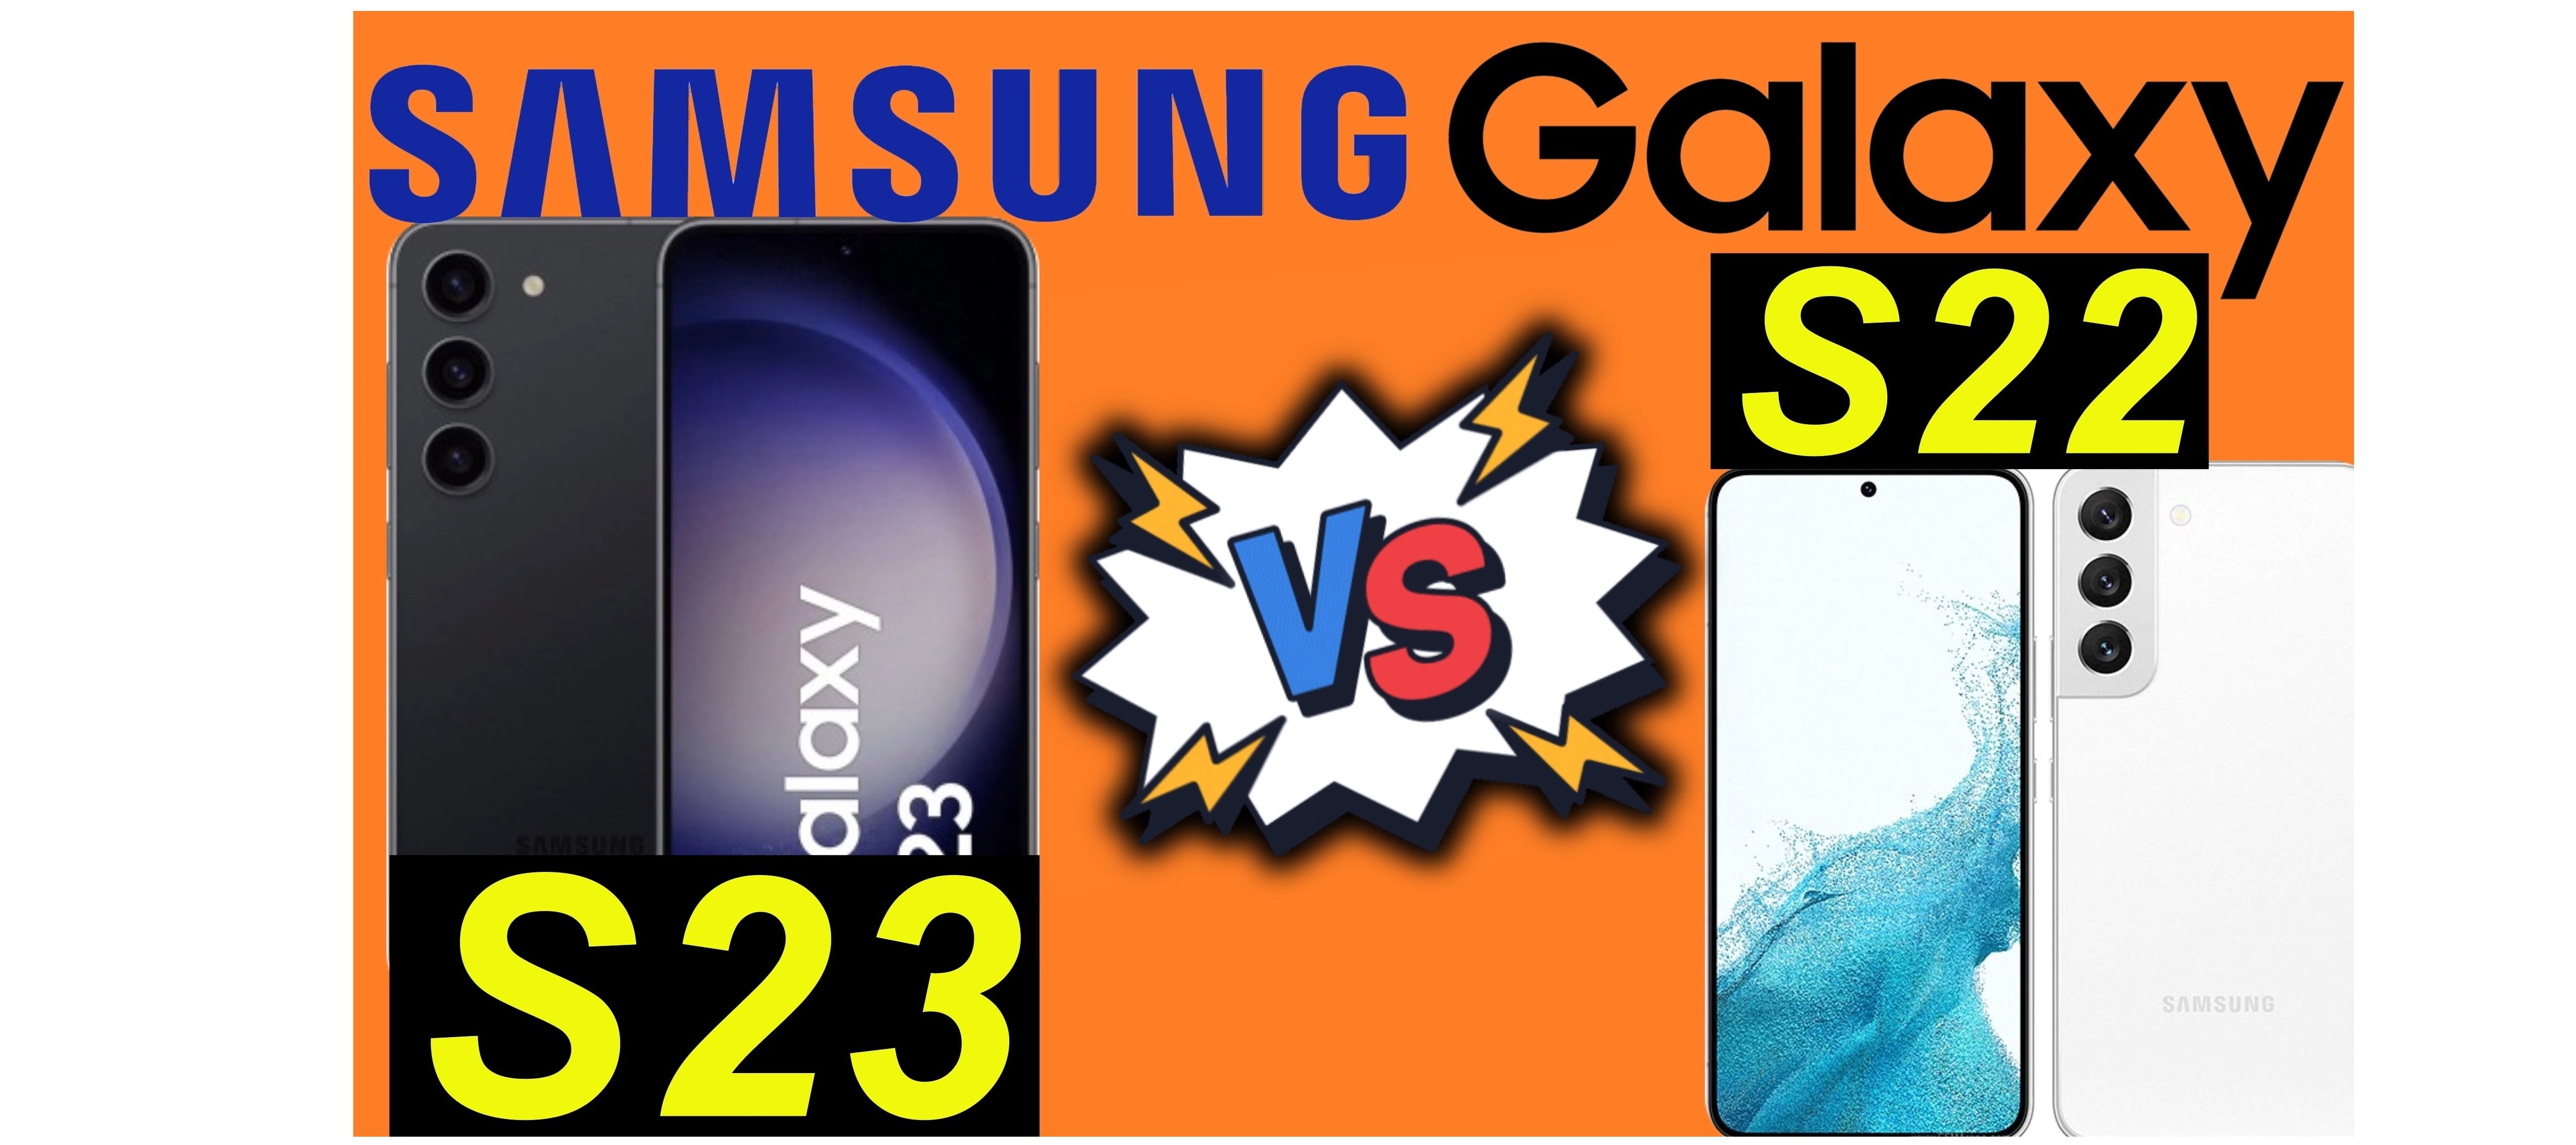 Samsung Galaxy S23 versus S22